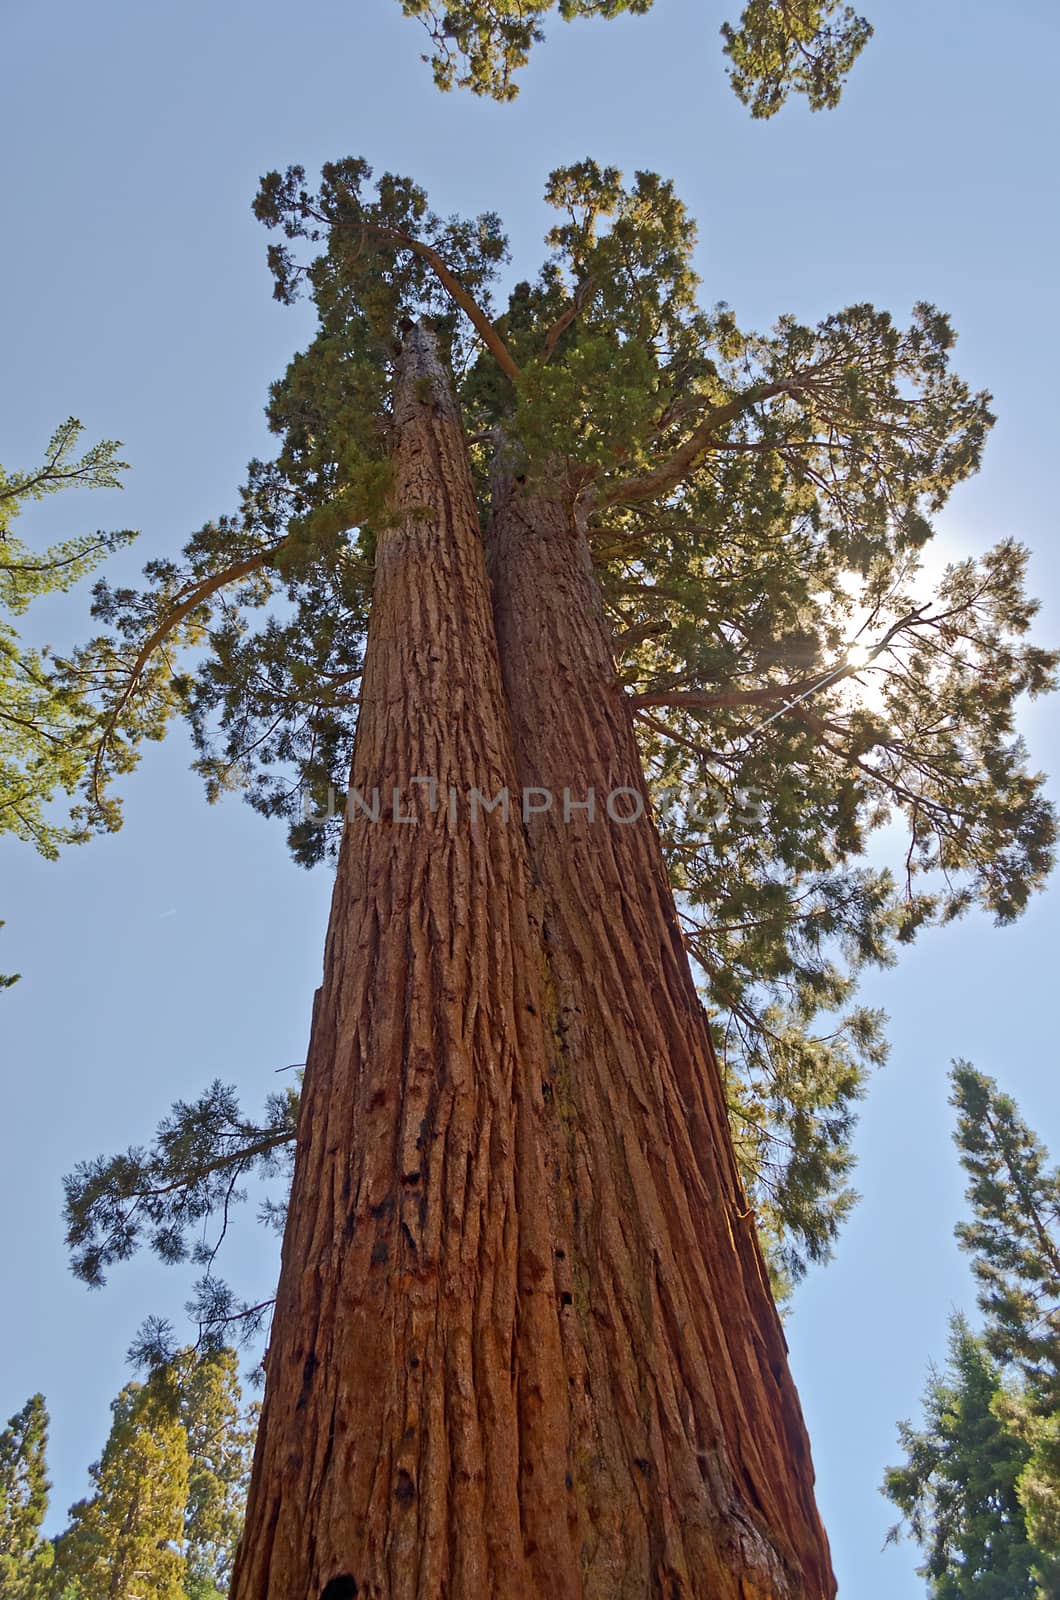 Giant Sequoias, Mariposa Grove in Yosemite National Park, California, USA